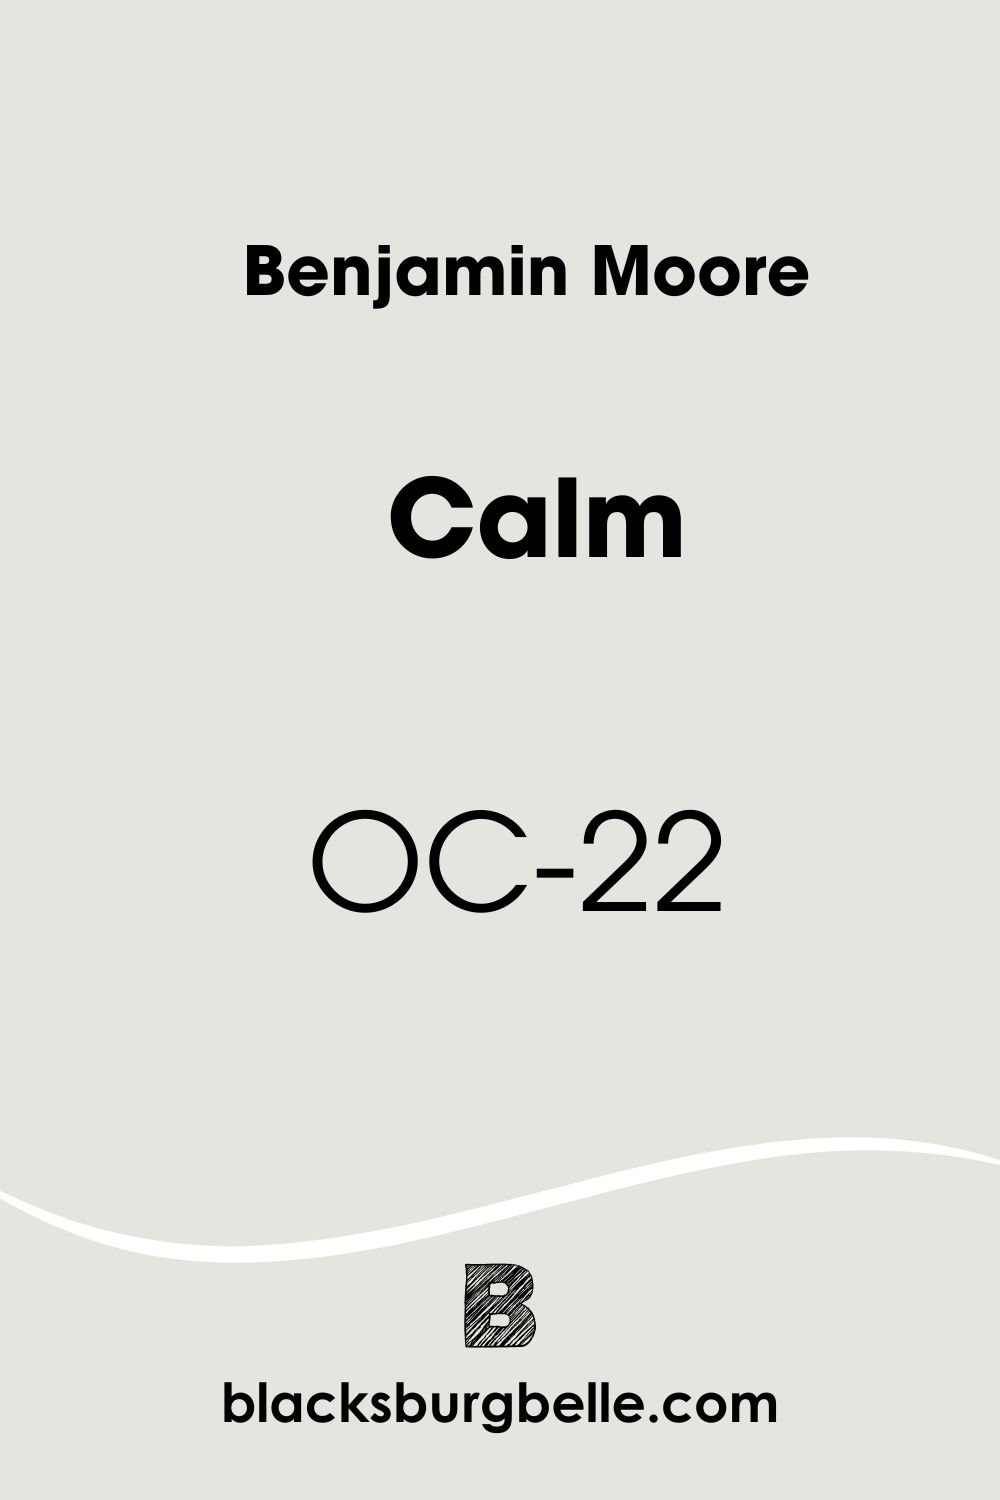 Benjamin Moore Calm OC-22 